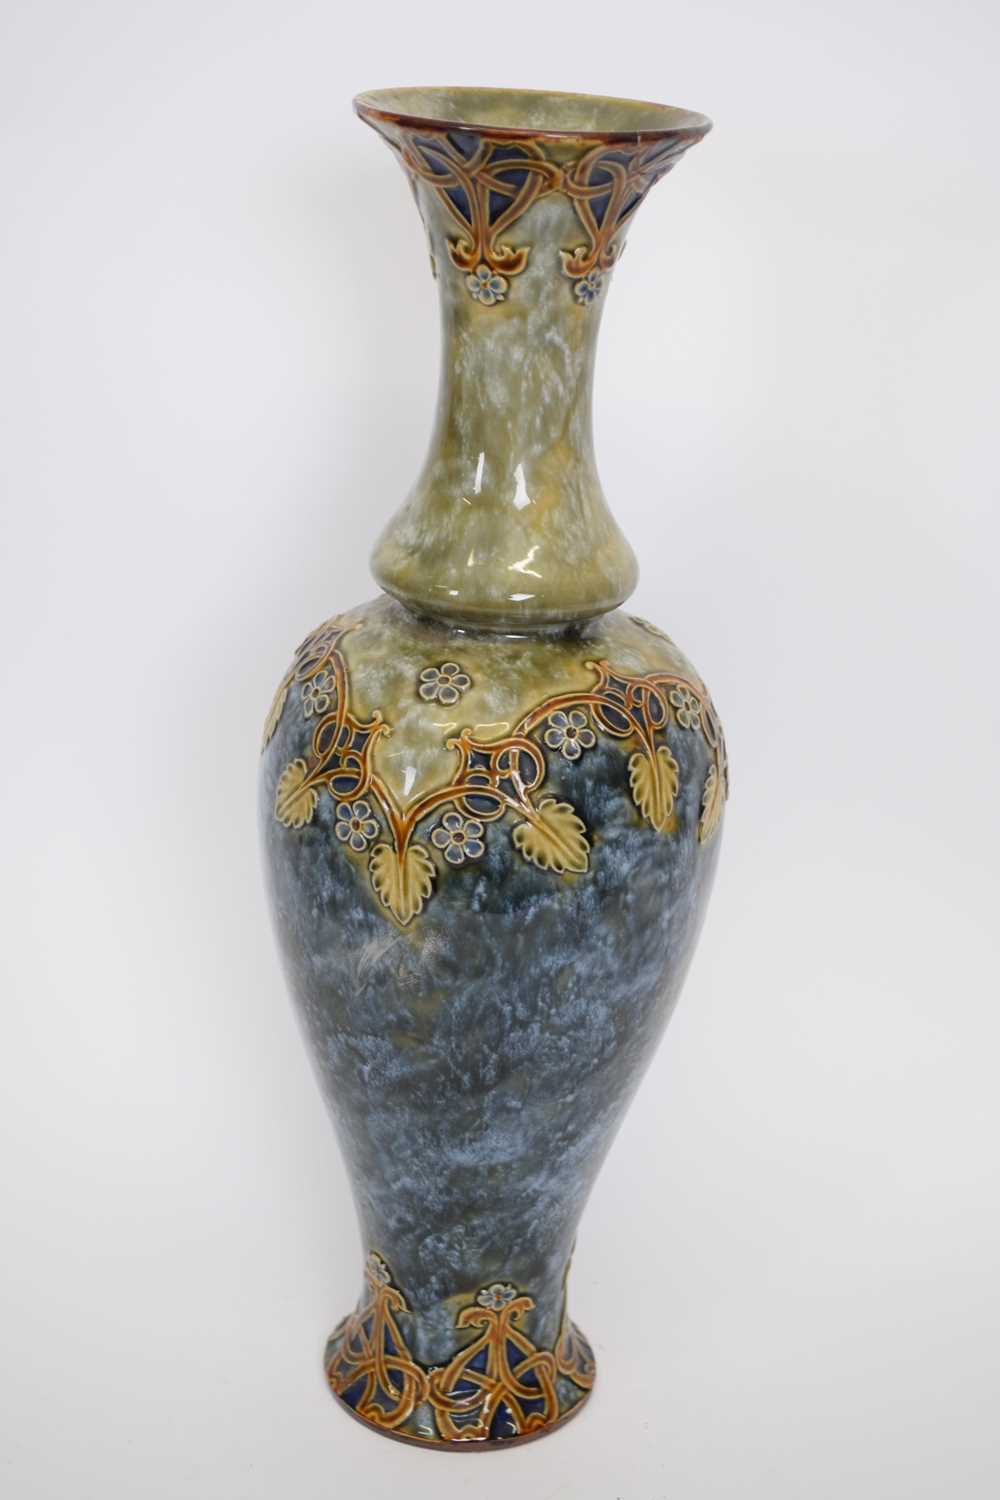 Doulton Art Nouveau Vase with tube lined floral design. - Image 3 of 6